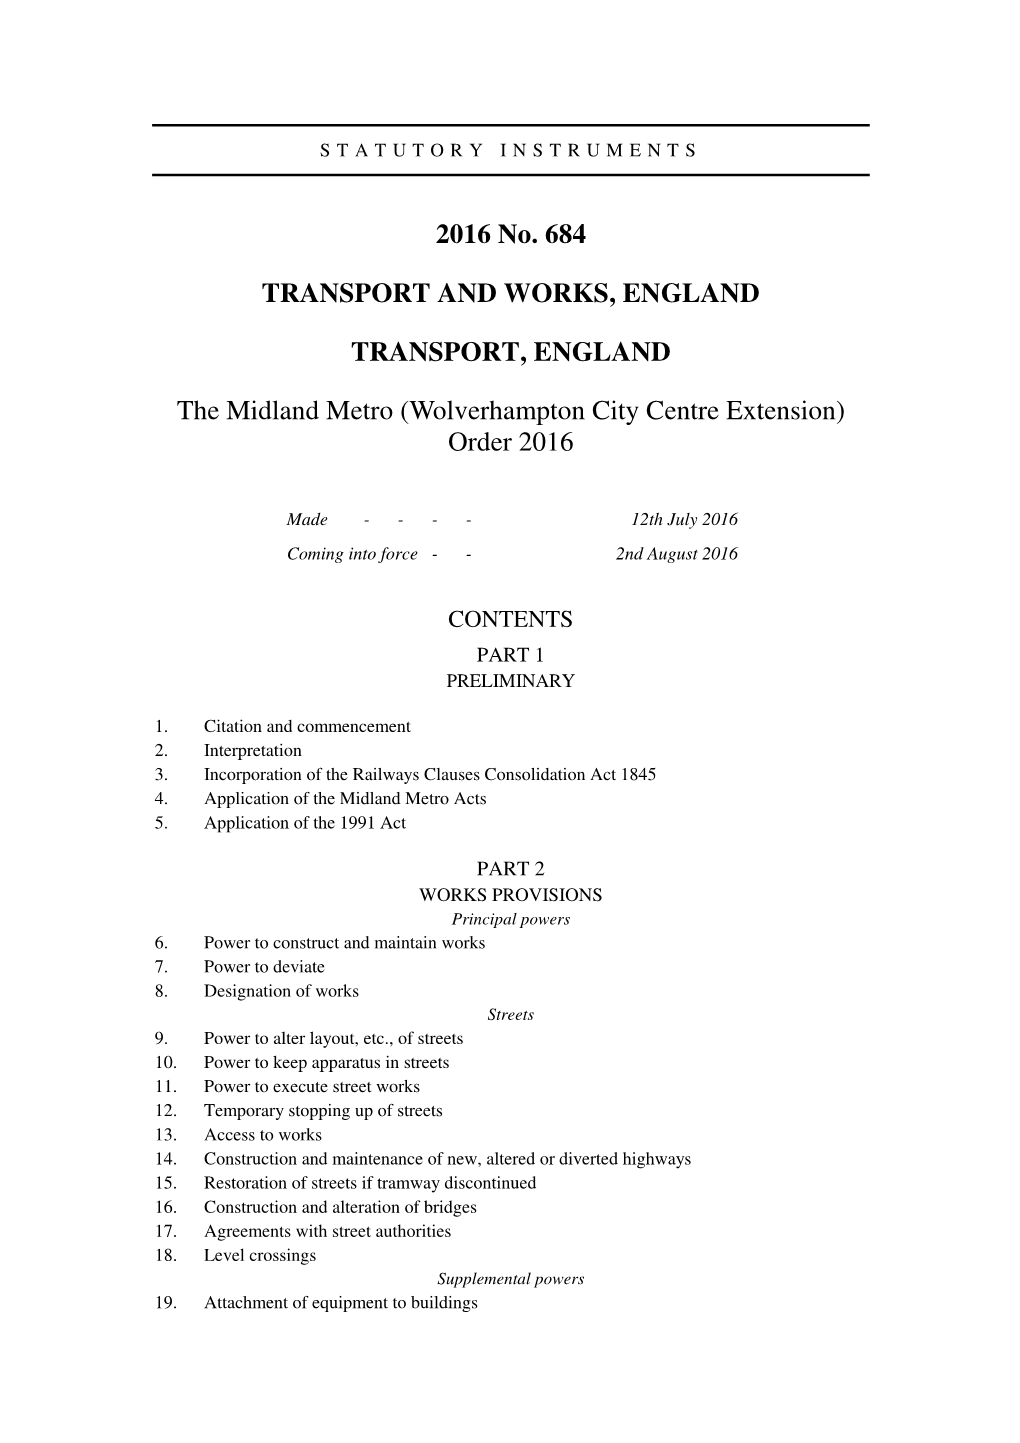 The Midland Metro (Wolverhampton City Centre Extension) Order 2016